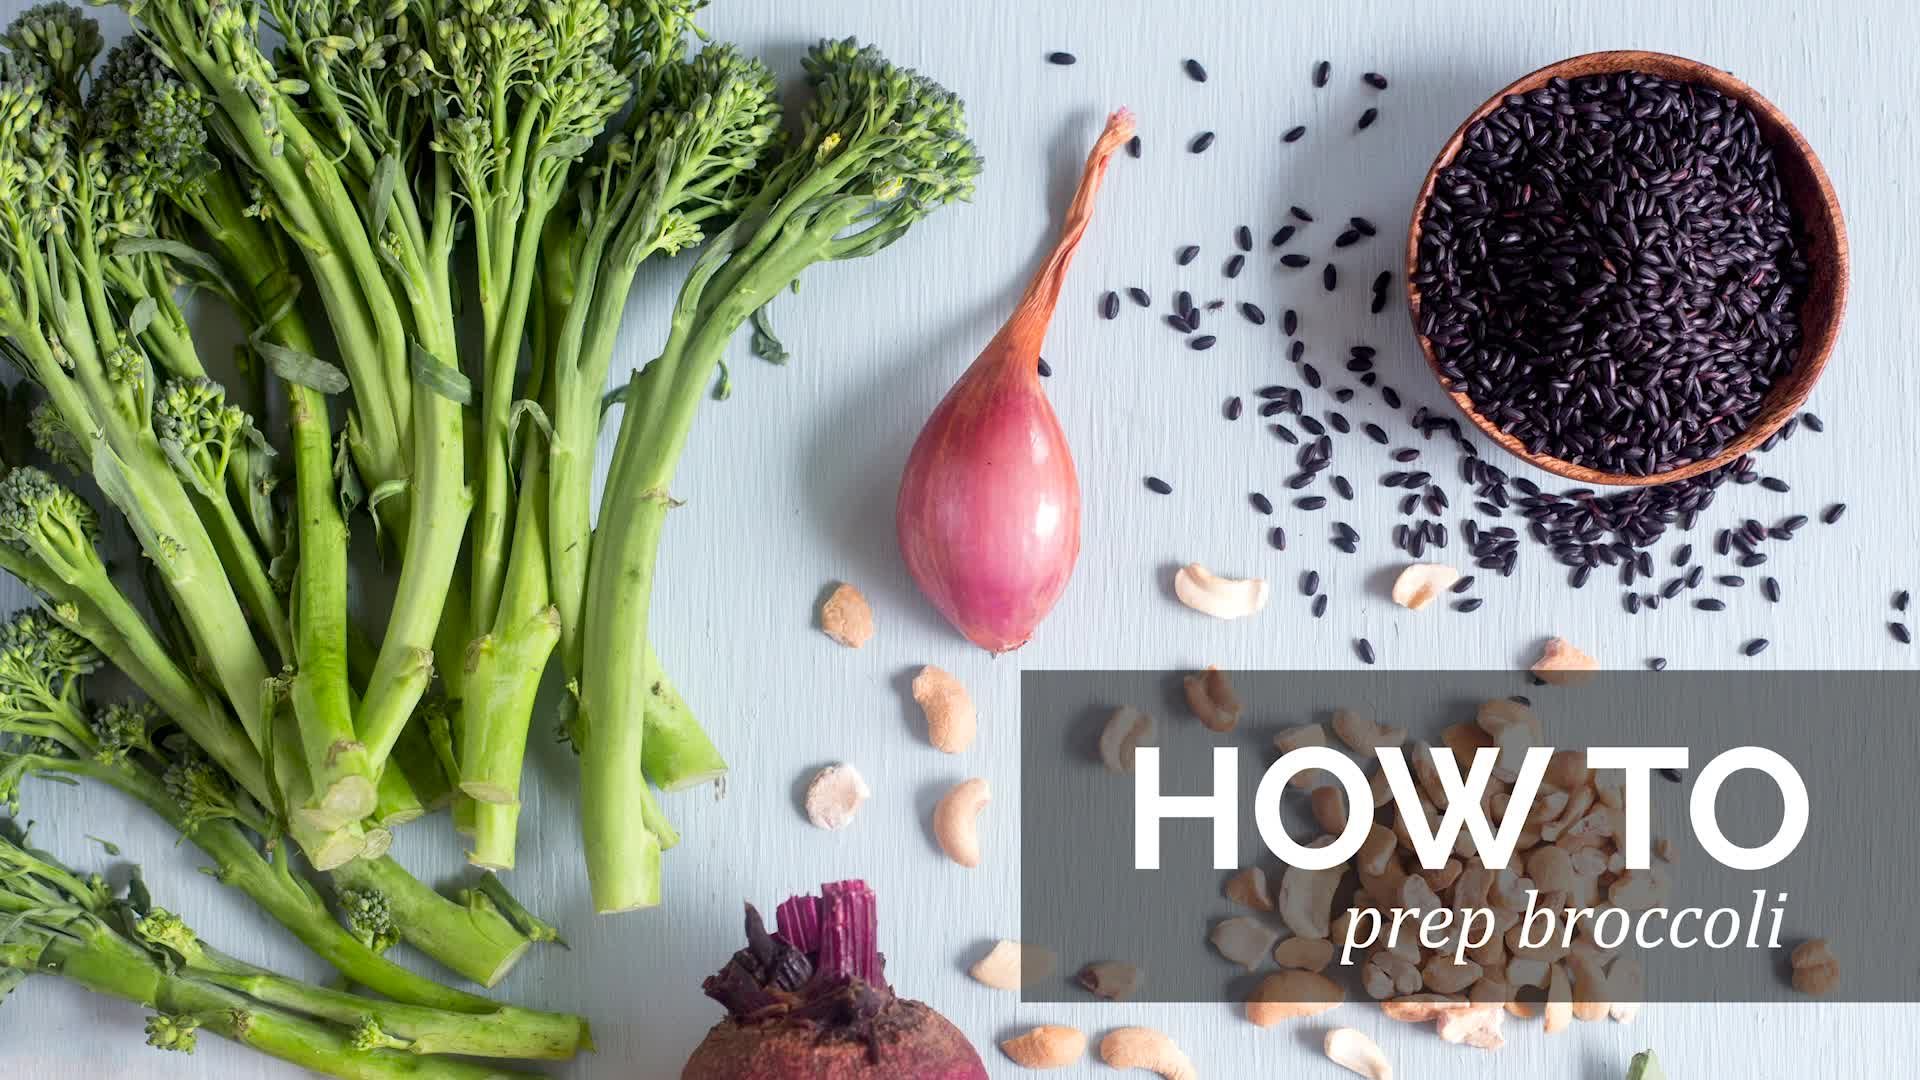 How to : Prep broccoli